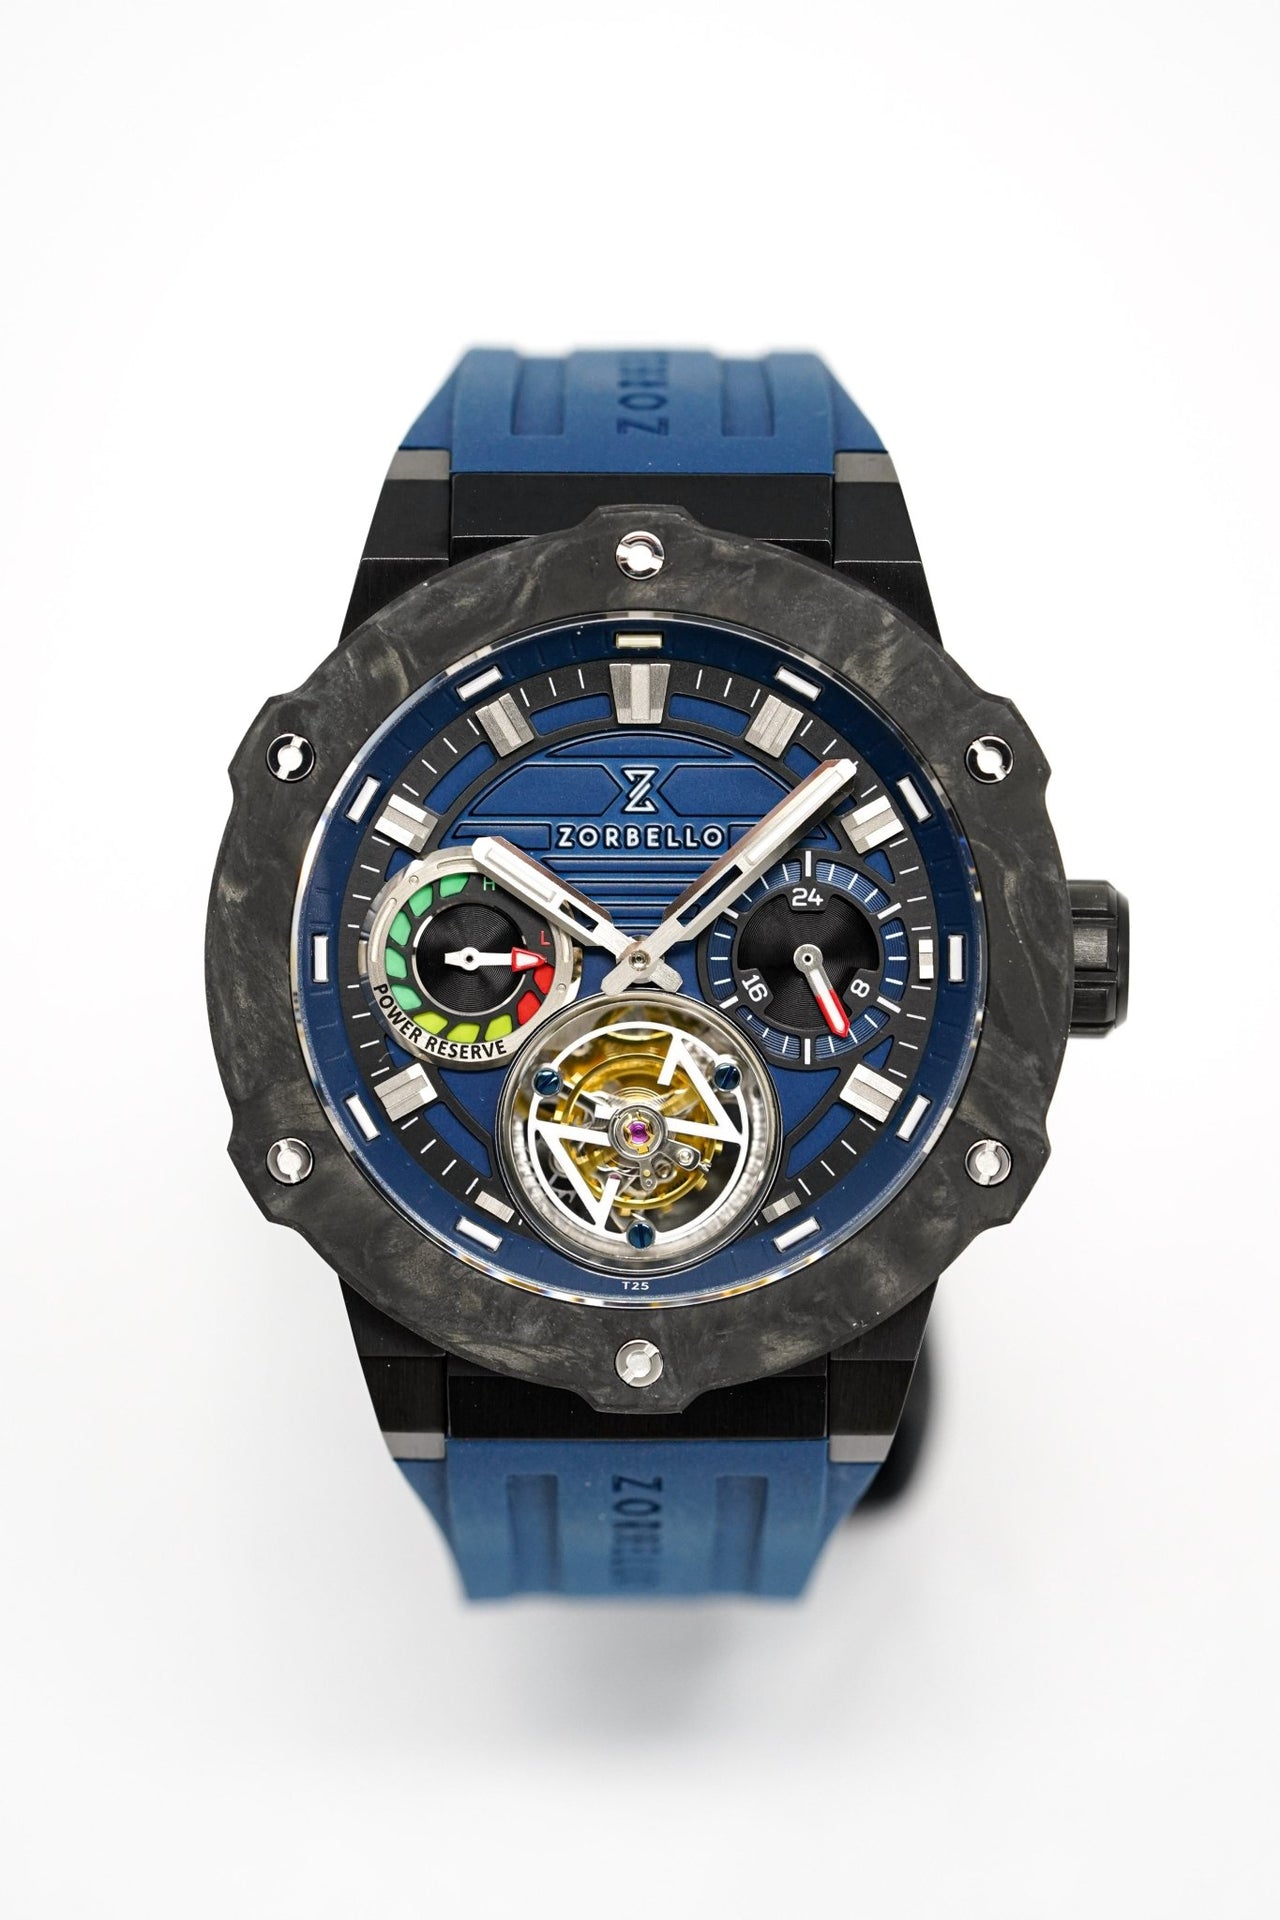 Zorbello Watch T3 – ZBAD004 Tourbillon Tritium Blue Super-Luminova® Crystals & Watches